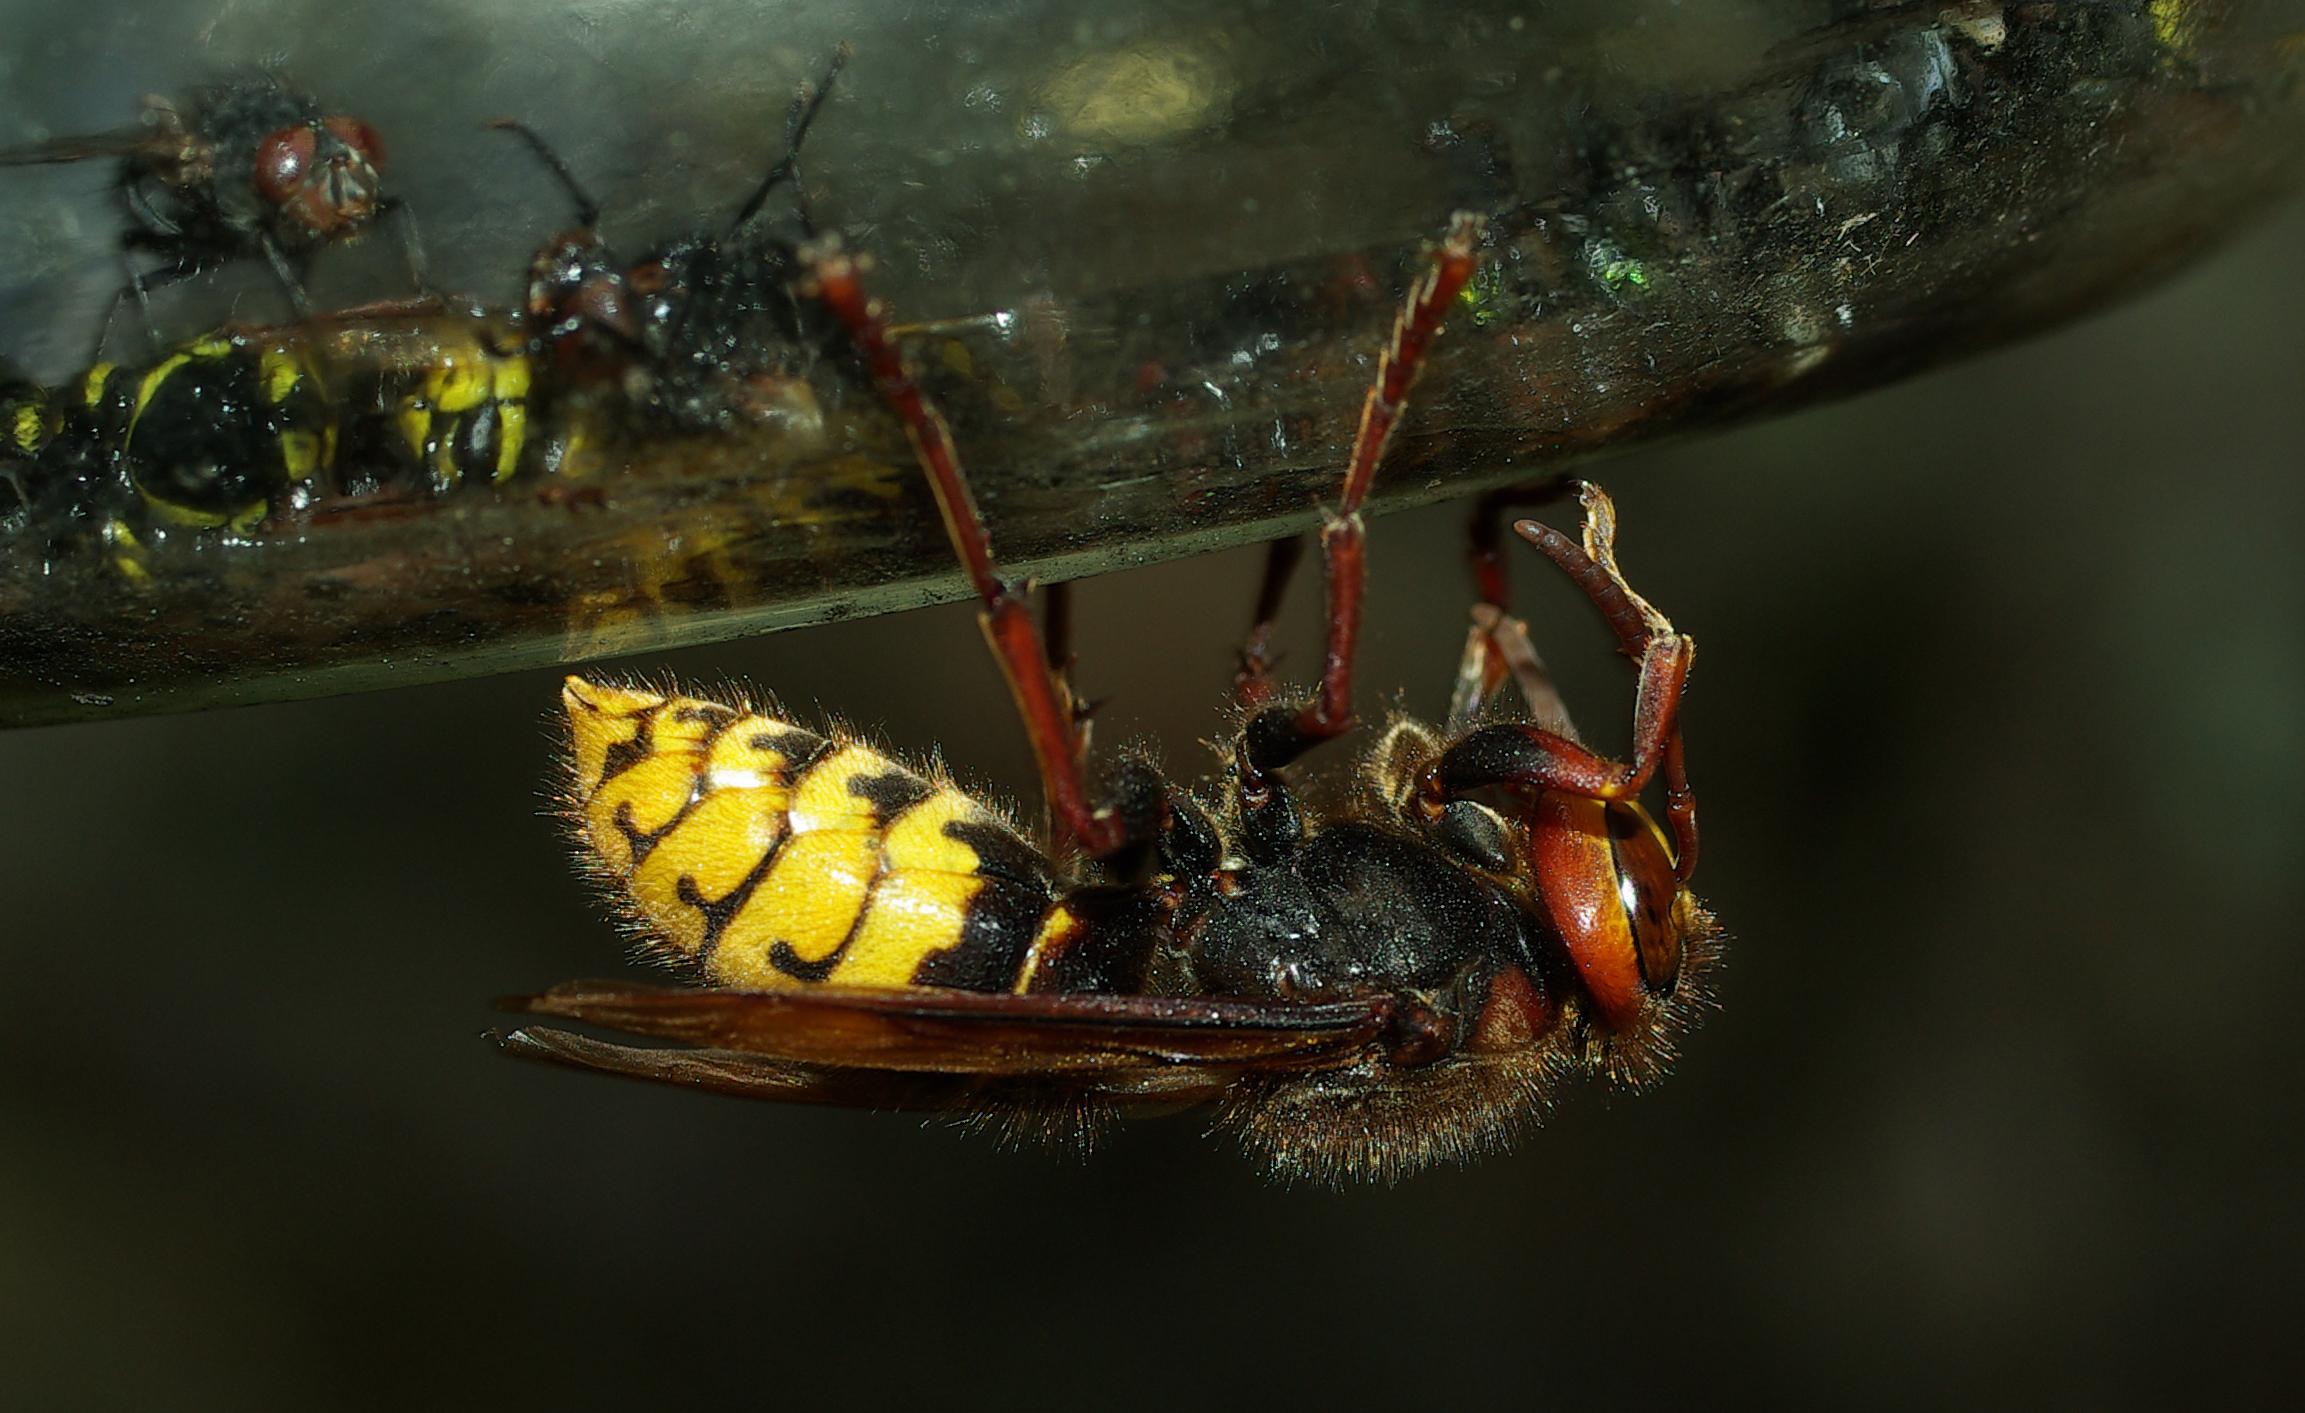 A hornet upside down on a branch.